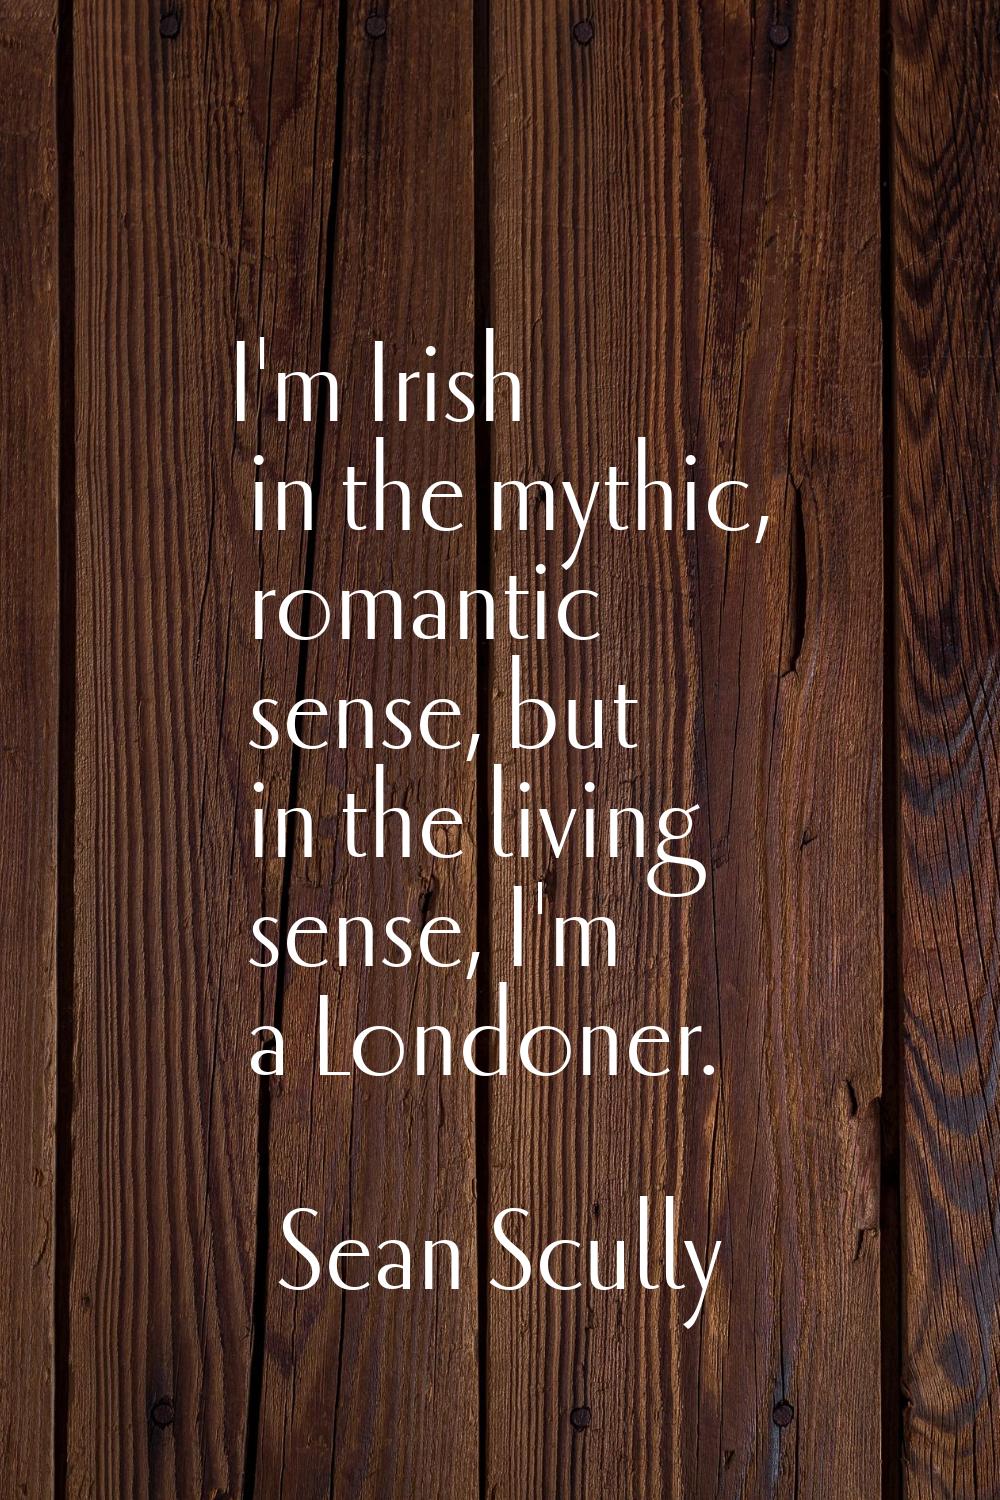 I'm Irish in the mythic, romantic sense, but in the living sense, I'm a Londoner.